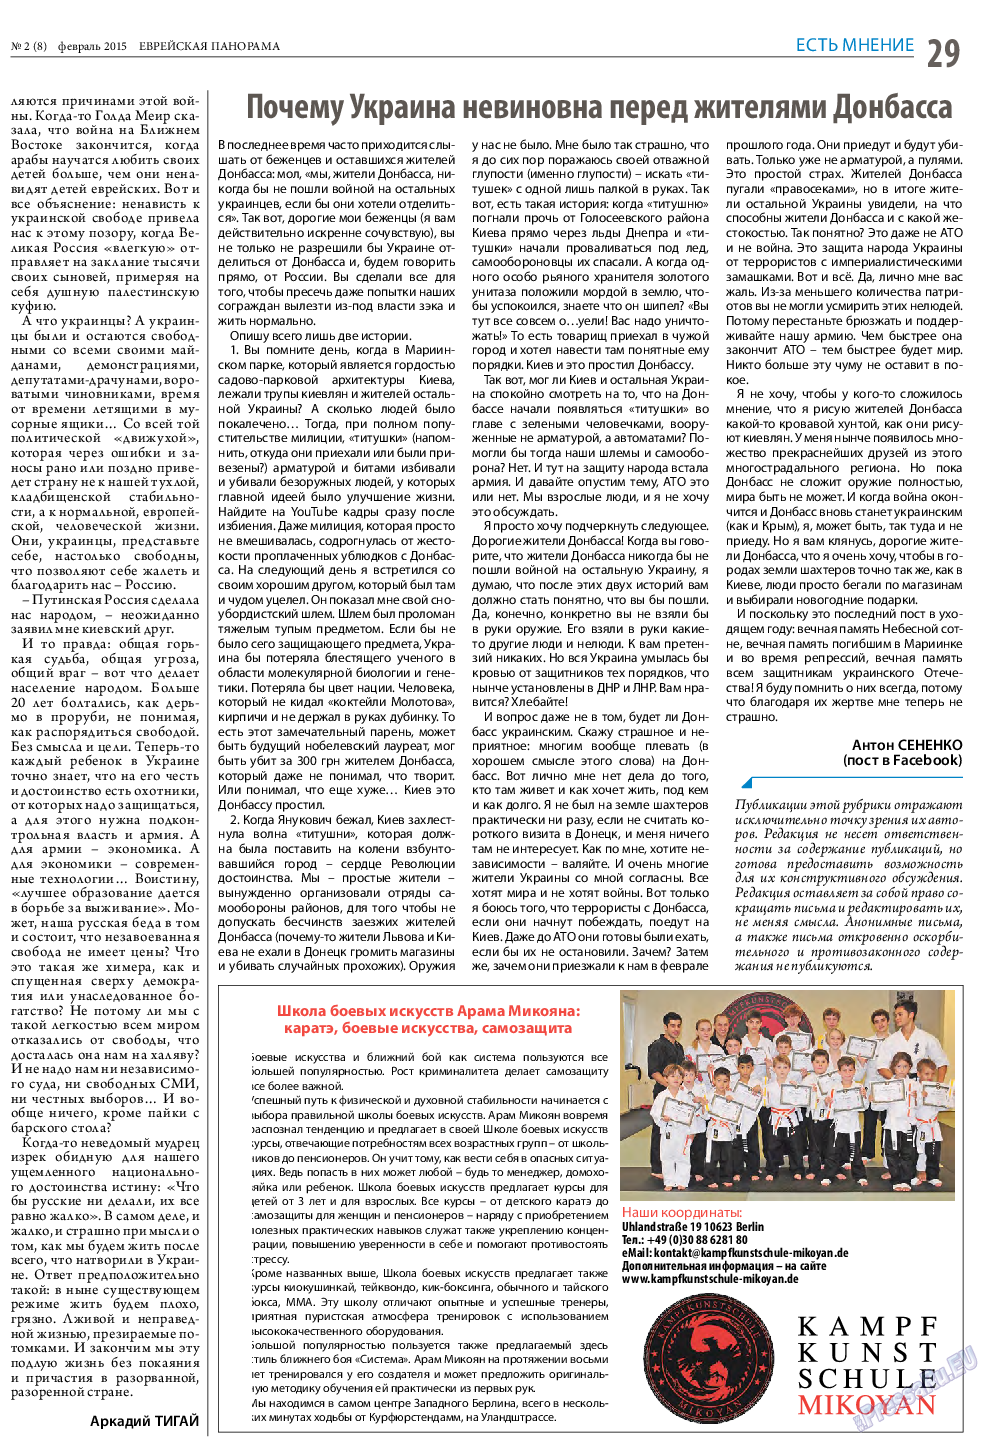 Еврейская панорама, газета. 2015 №2 стр.29